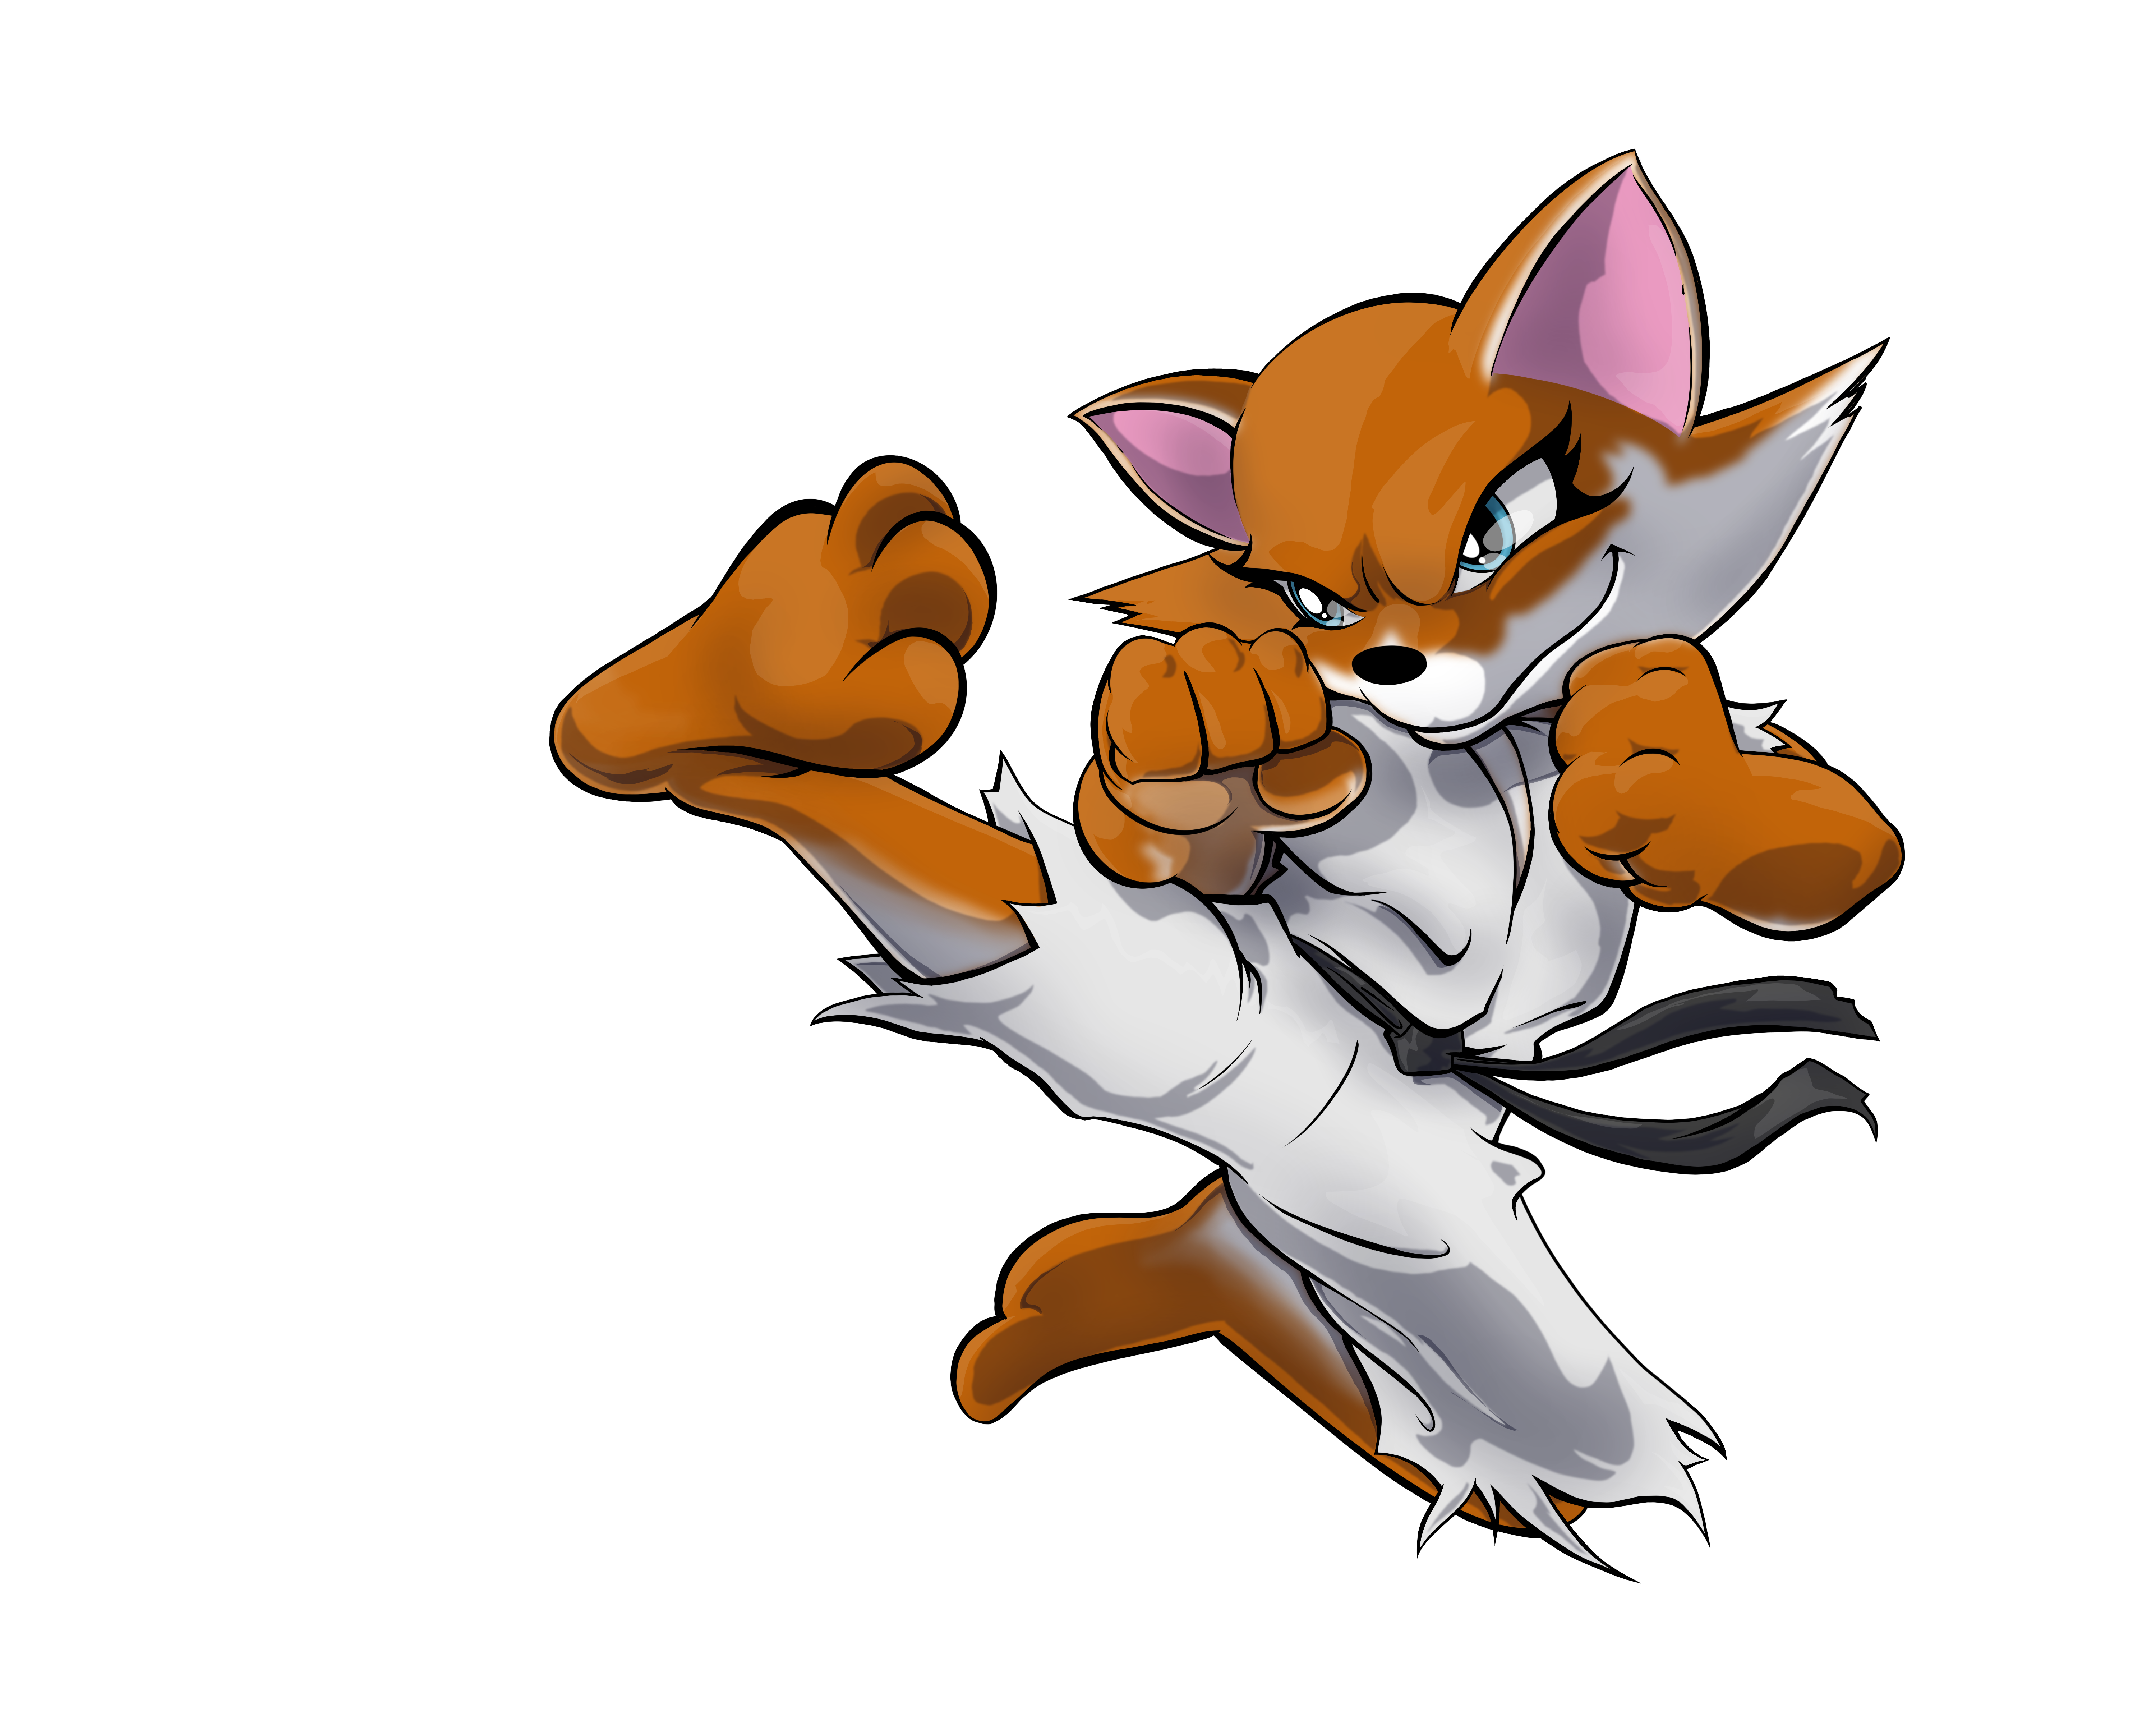 Foxie, the Fixie mascot, doing a sidekick!